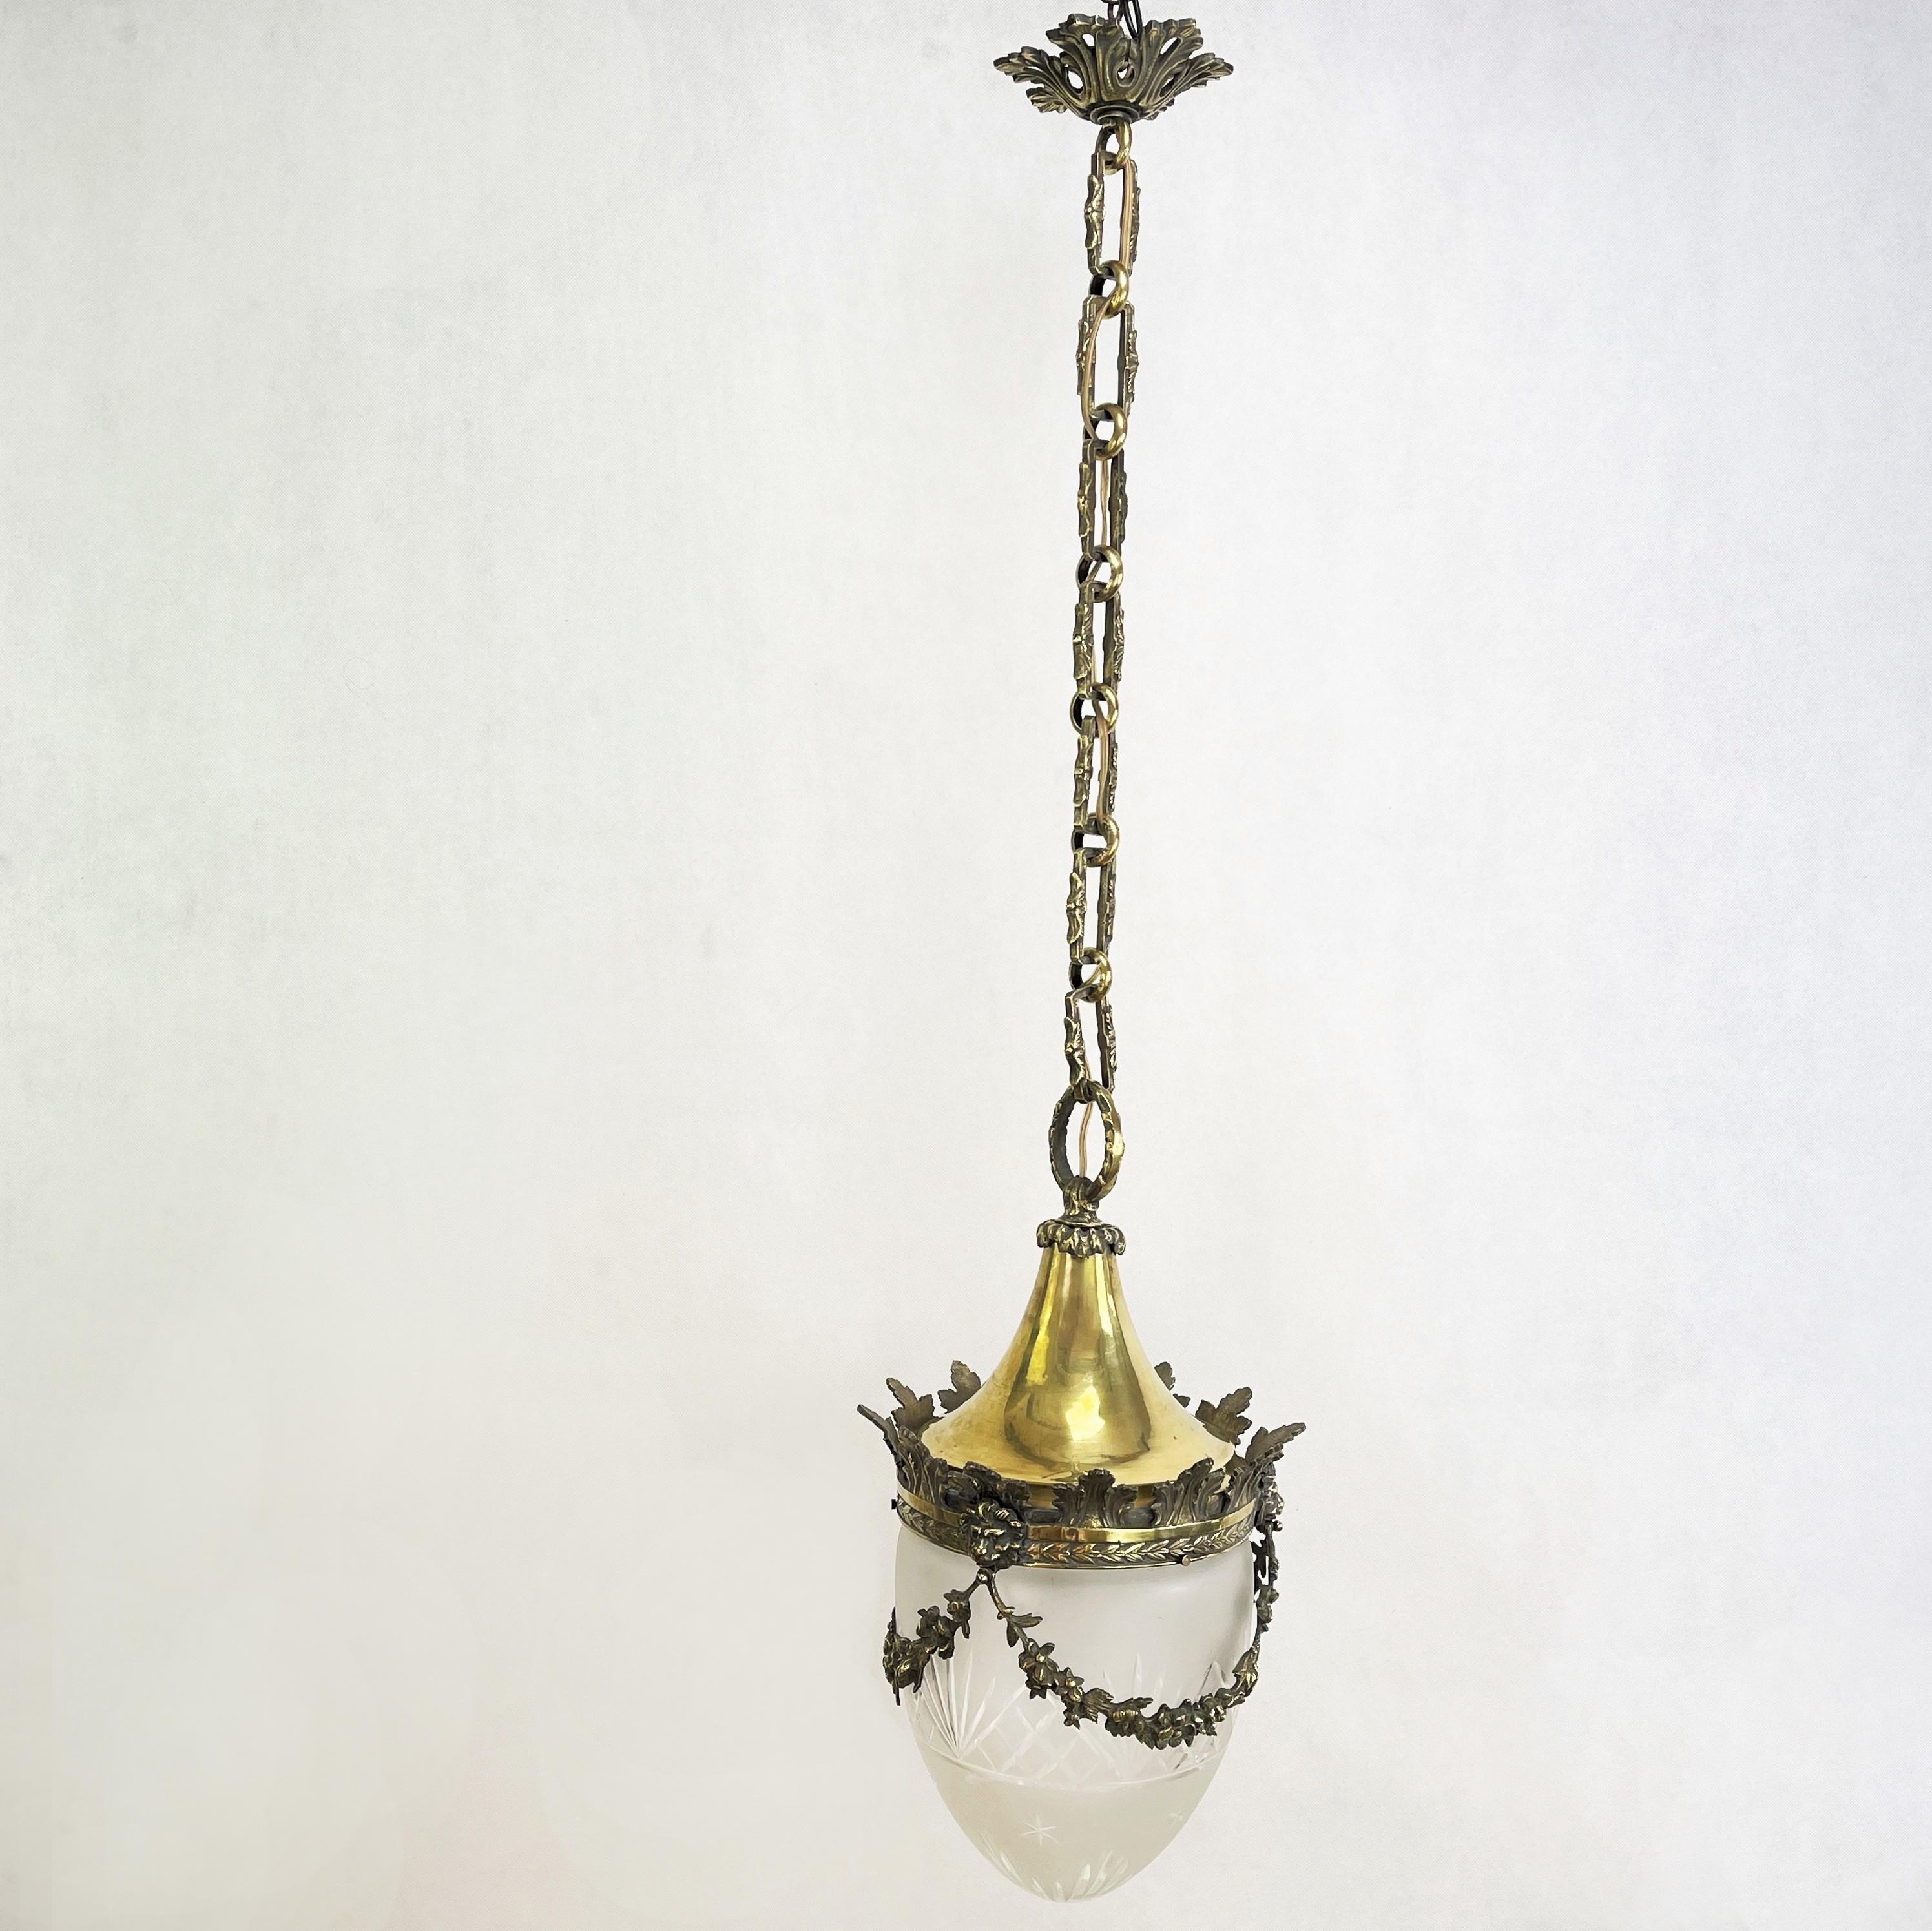 French Art Nouveau Hanging Lamp Bronze, Teardrop Shape, 1910s For Sale